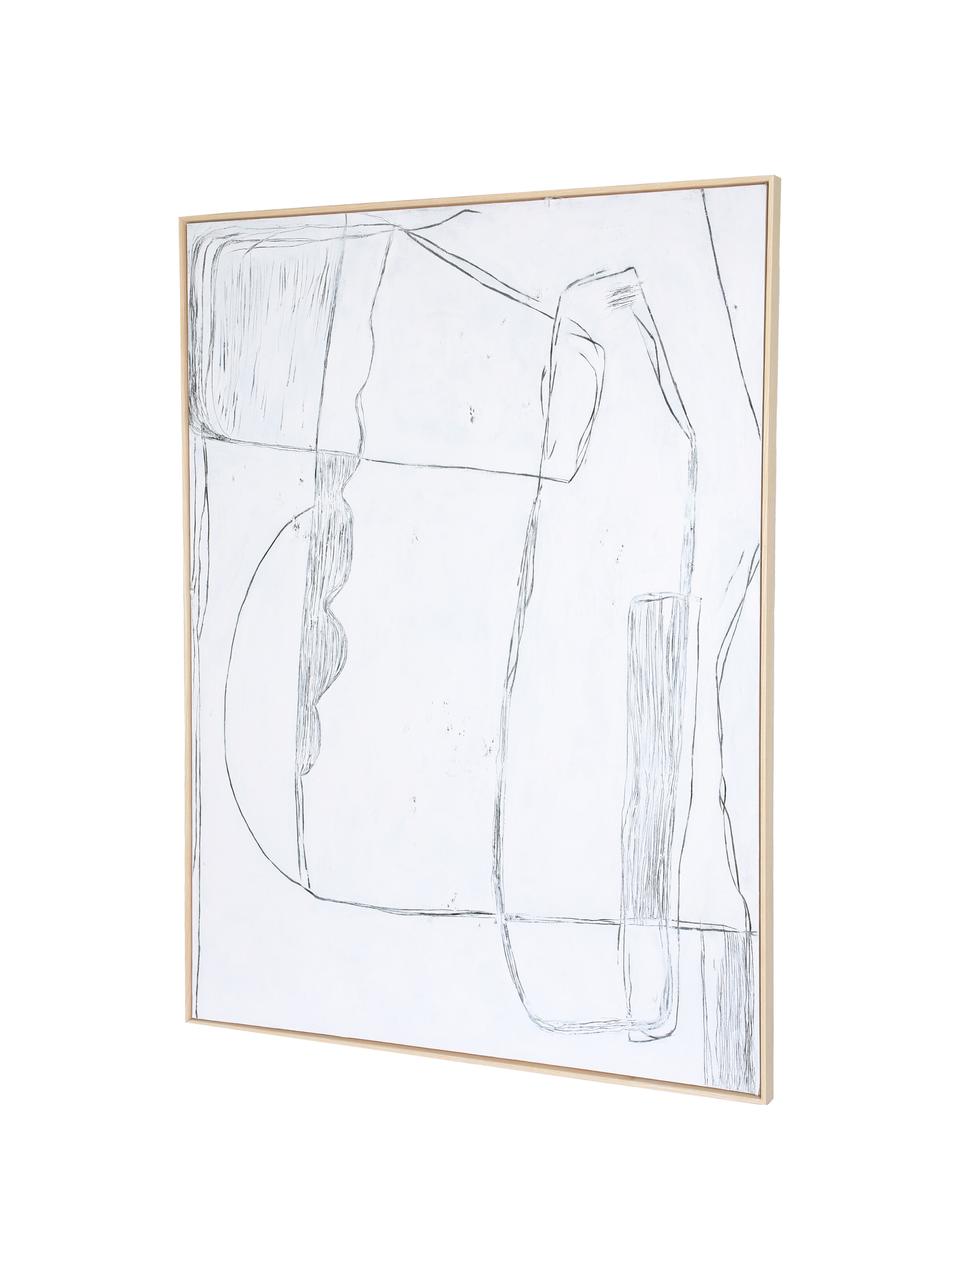 Ingelijste canvas print Brutalism, Frame: essenhout, Wit, zwart, B 120 x H 160 cm